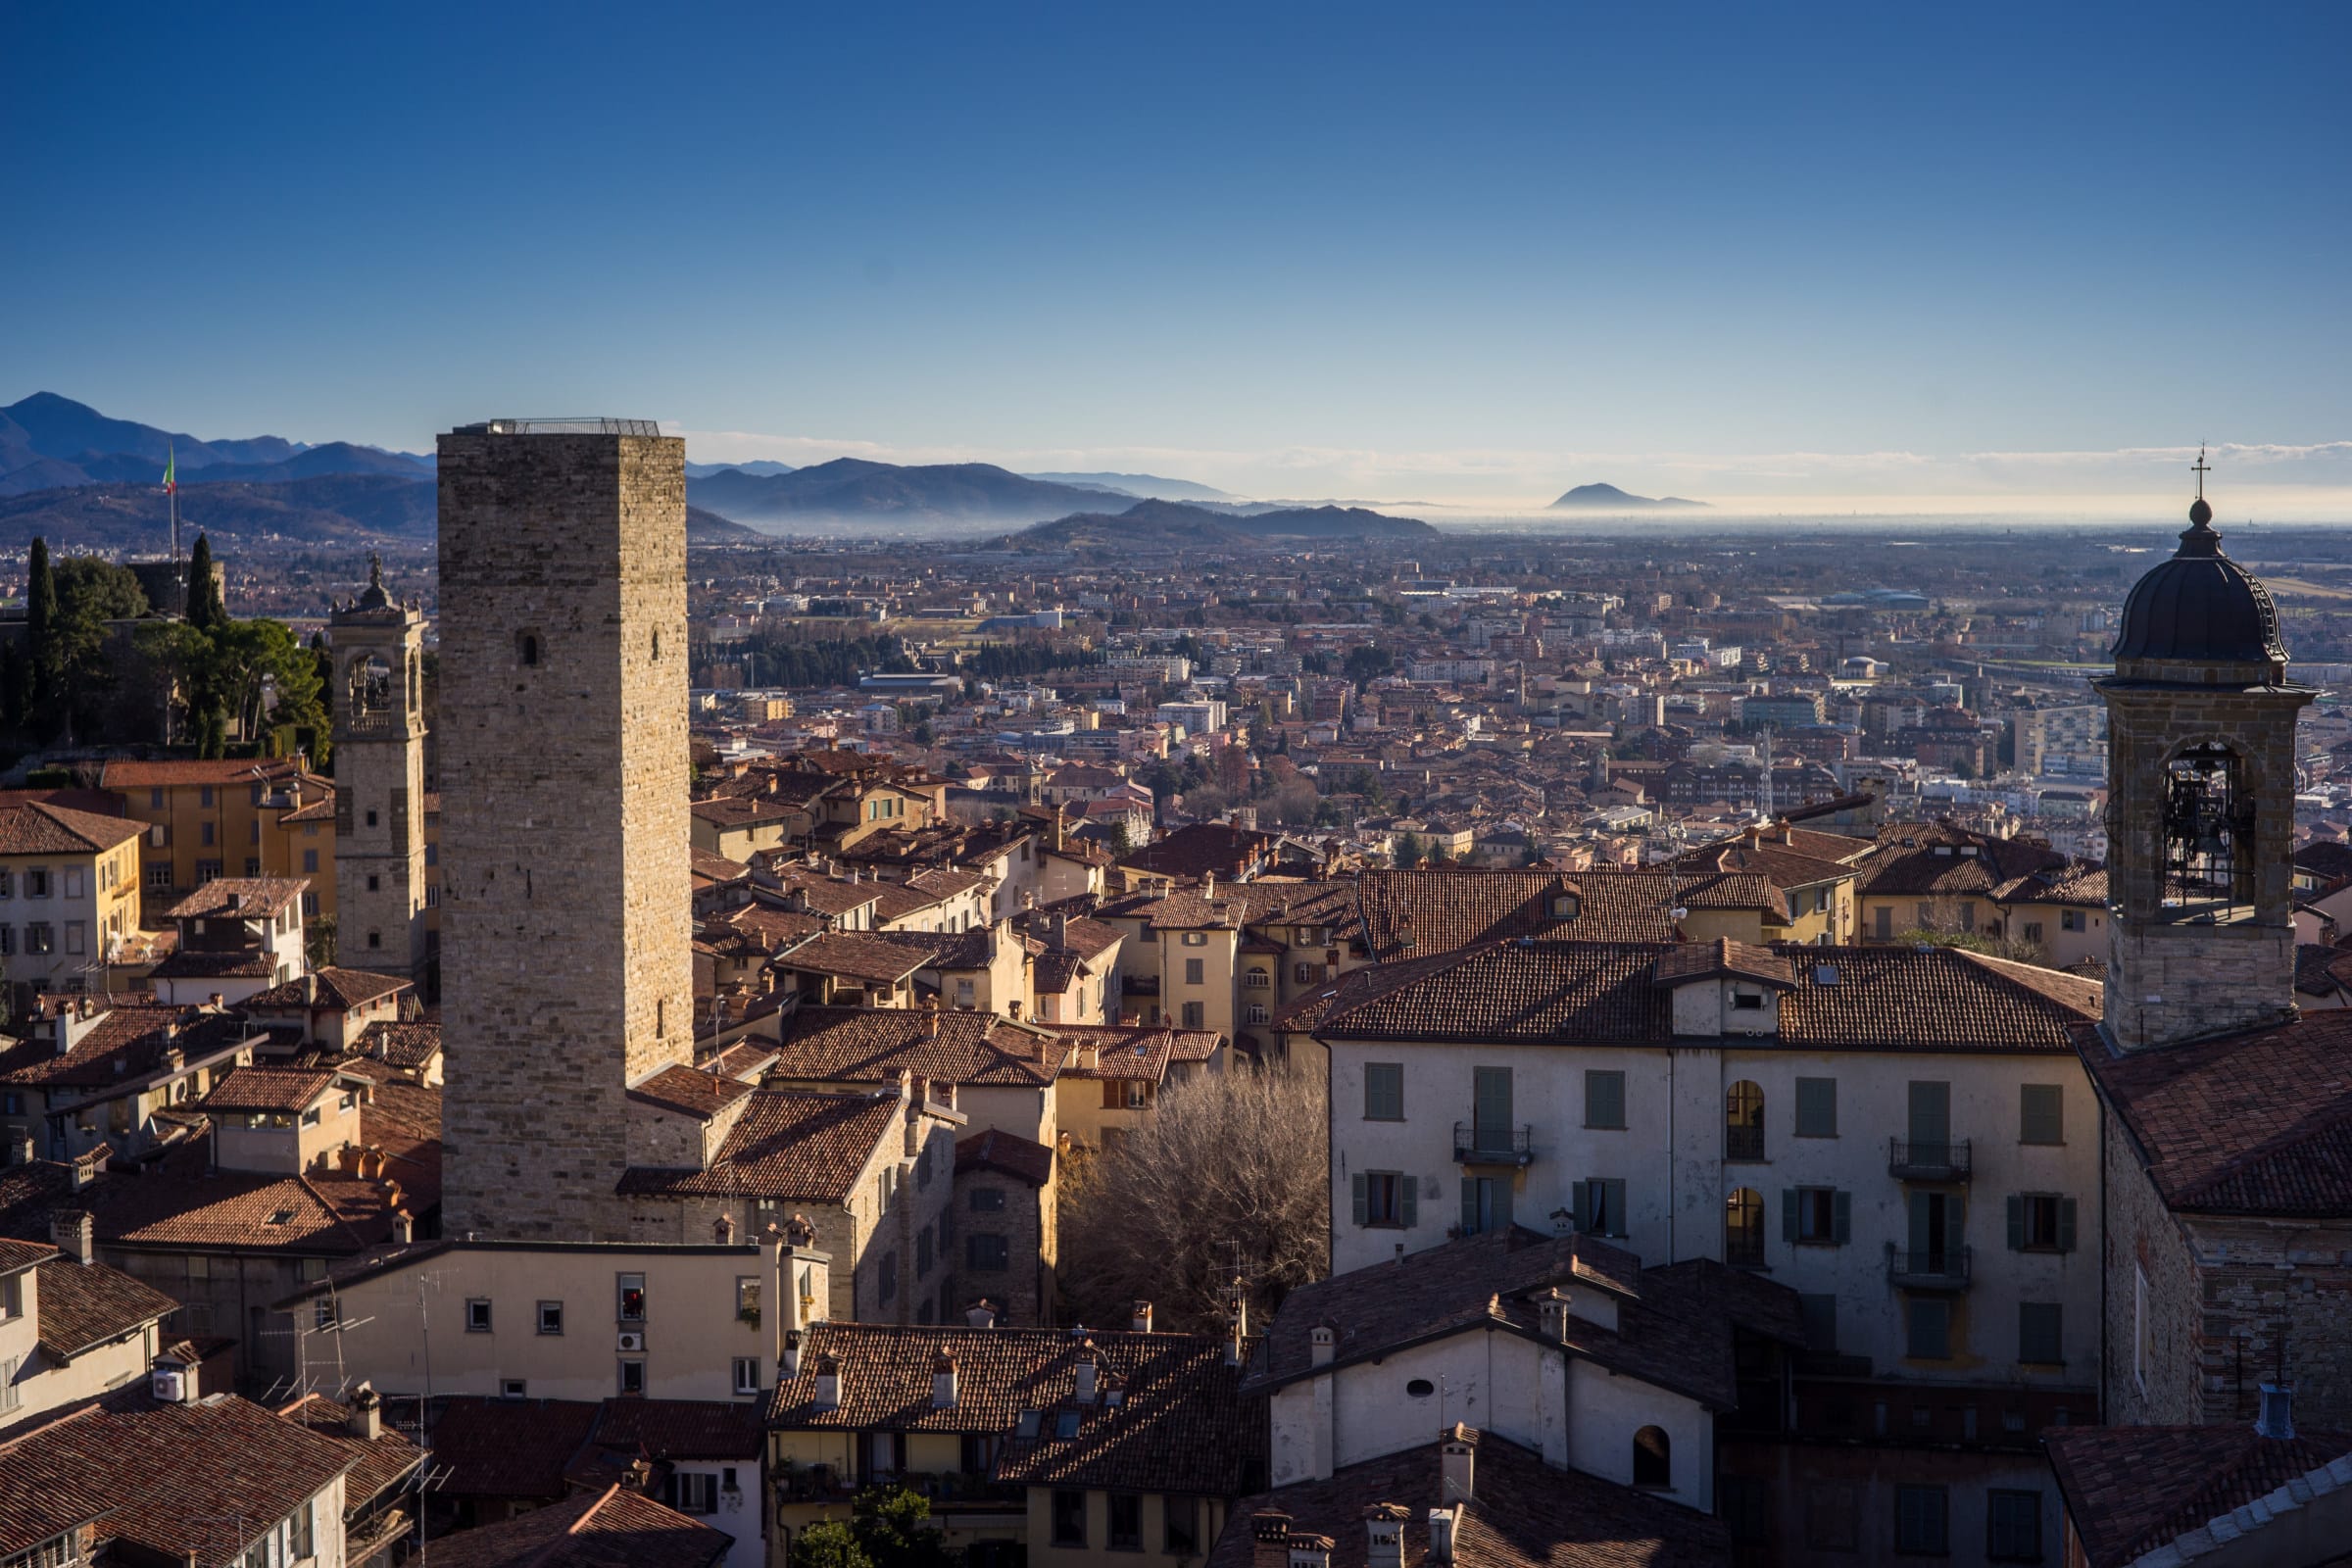 Town of Bergamo